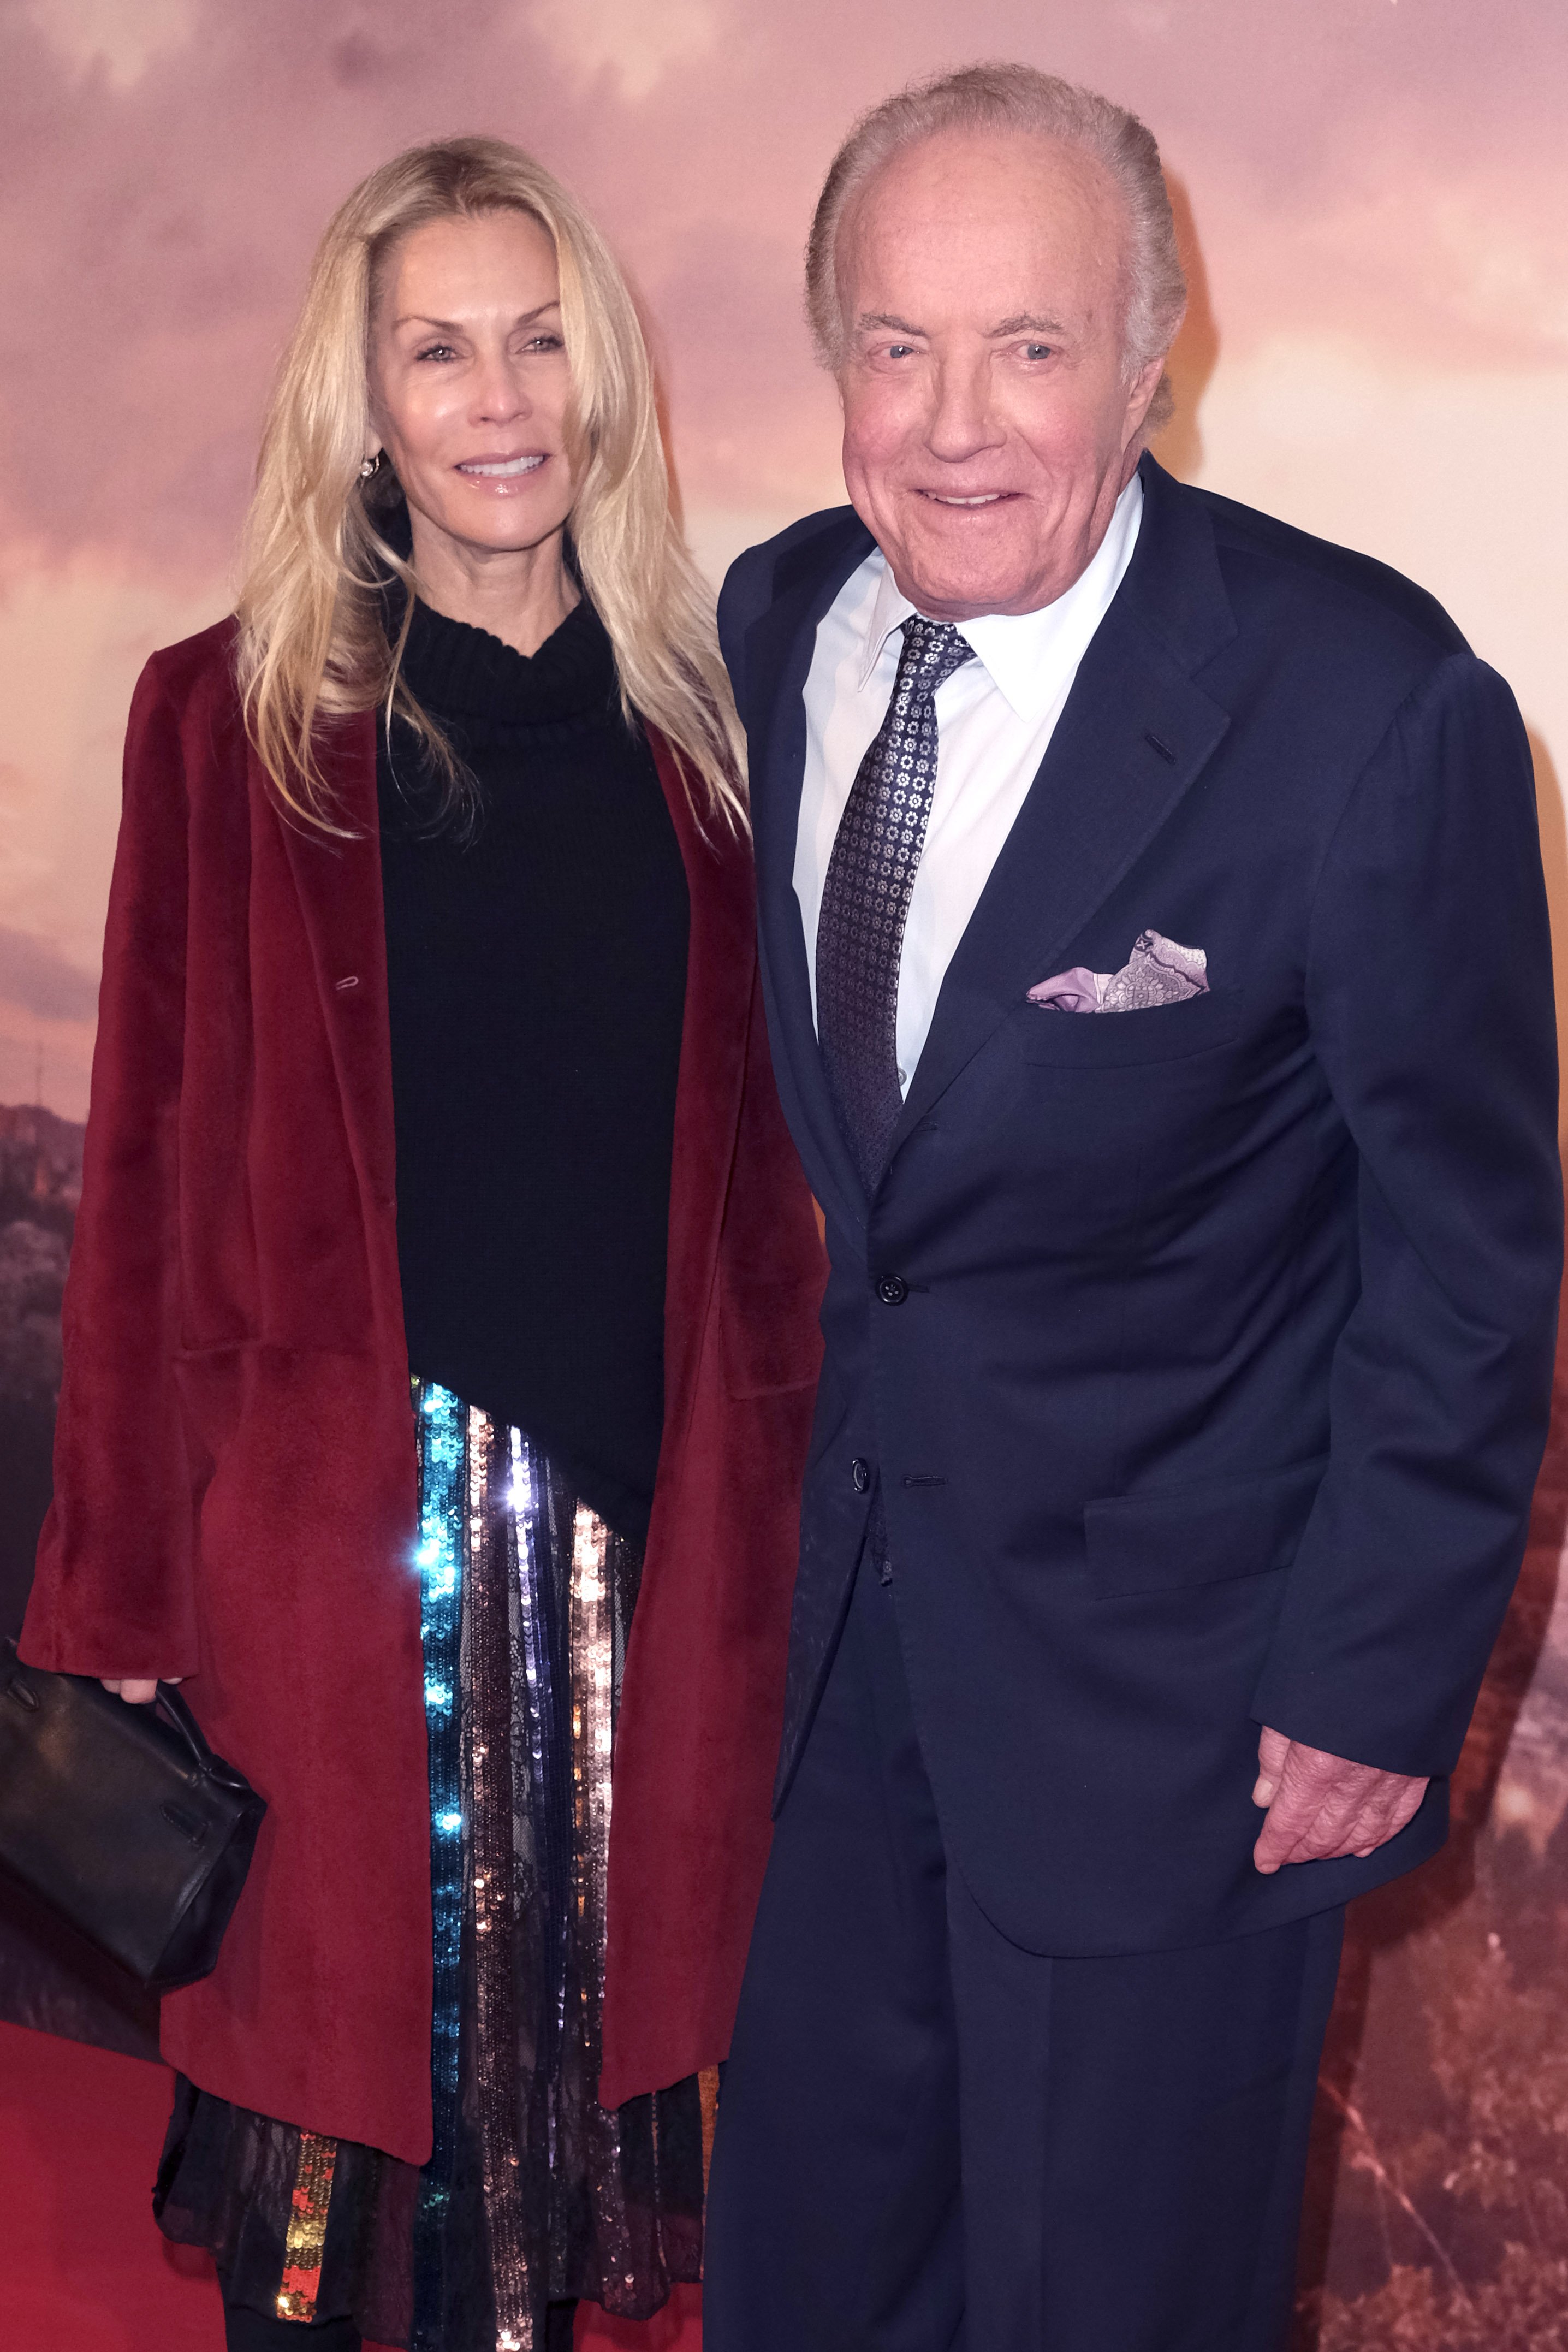 James Caan and Linda Stokes attending "Holy Lands" Paris premiere at Cinema UGC Normandie on December 04, 2018 in Paris, France. / Source: Getty Images